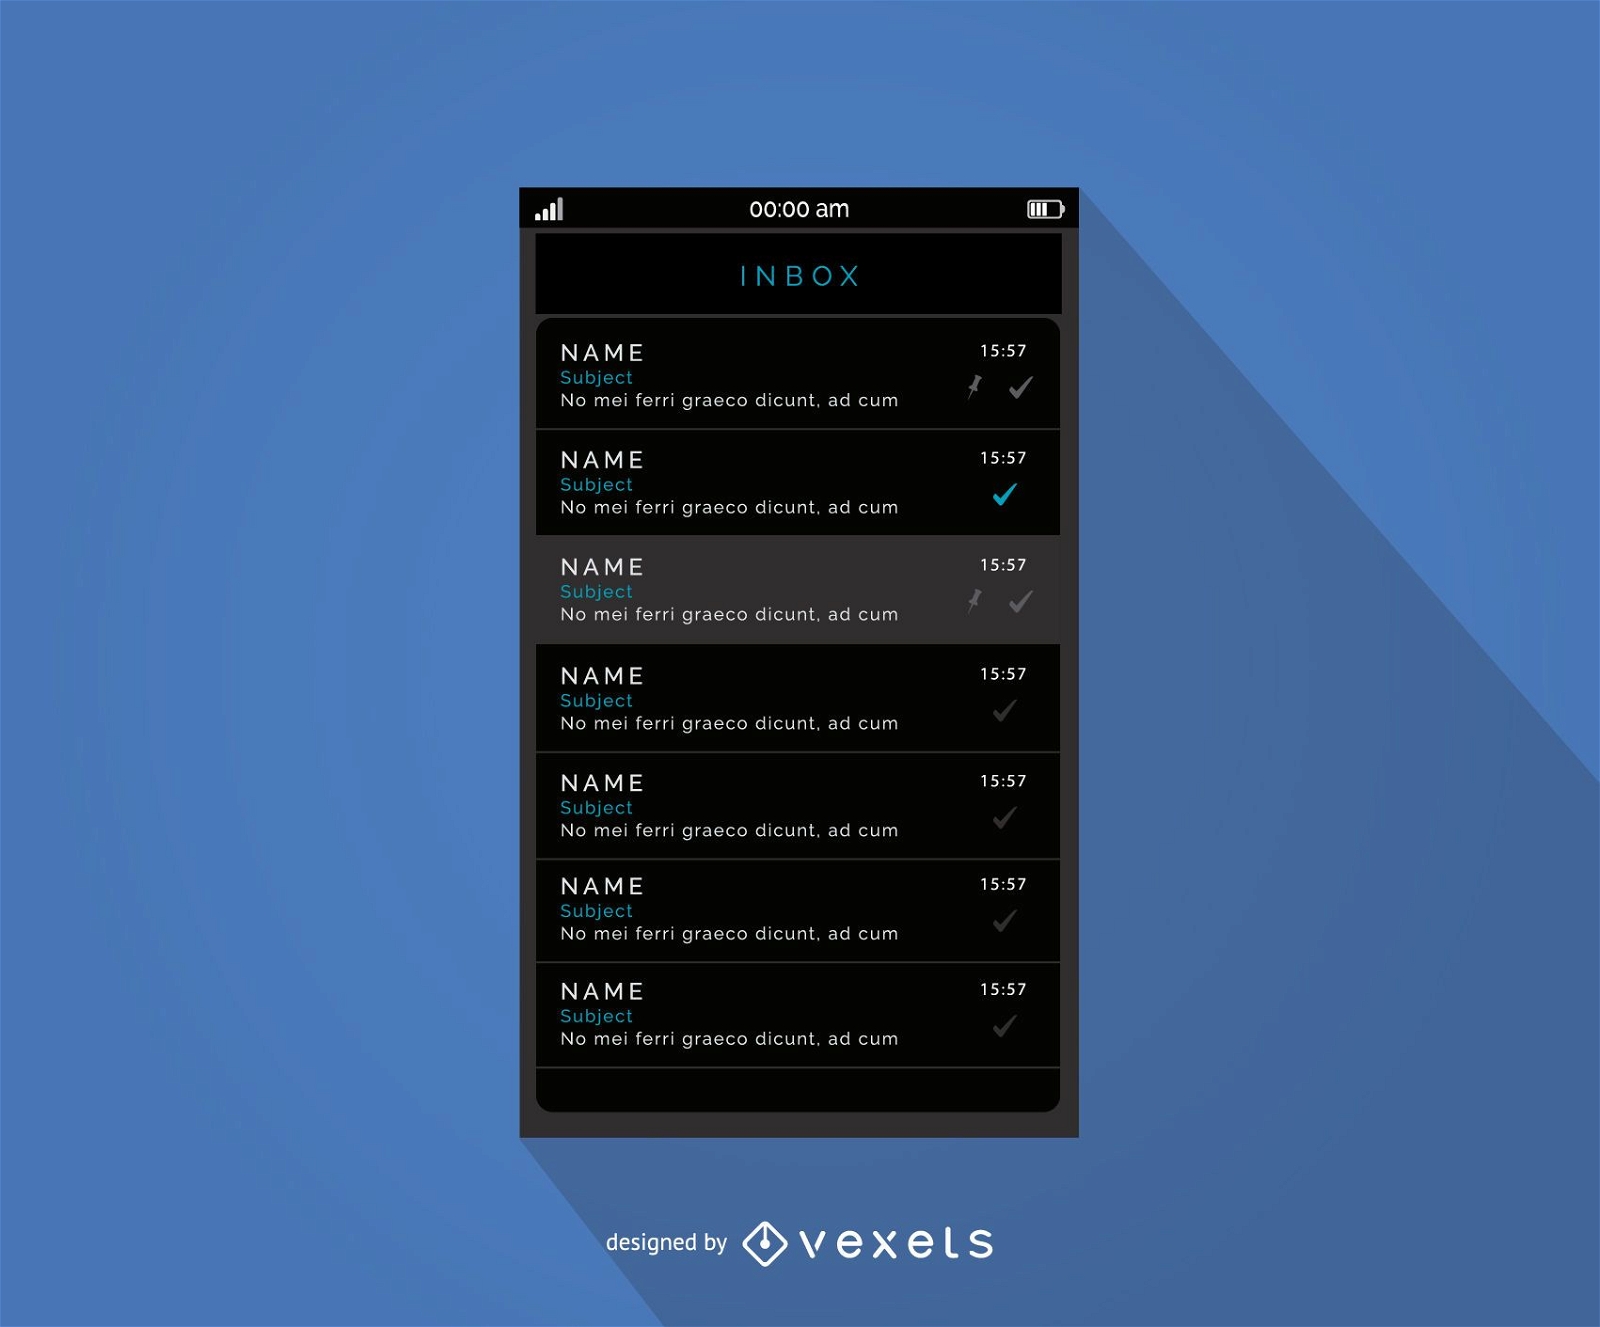 Mobile message inbox interface design